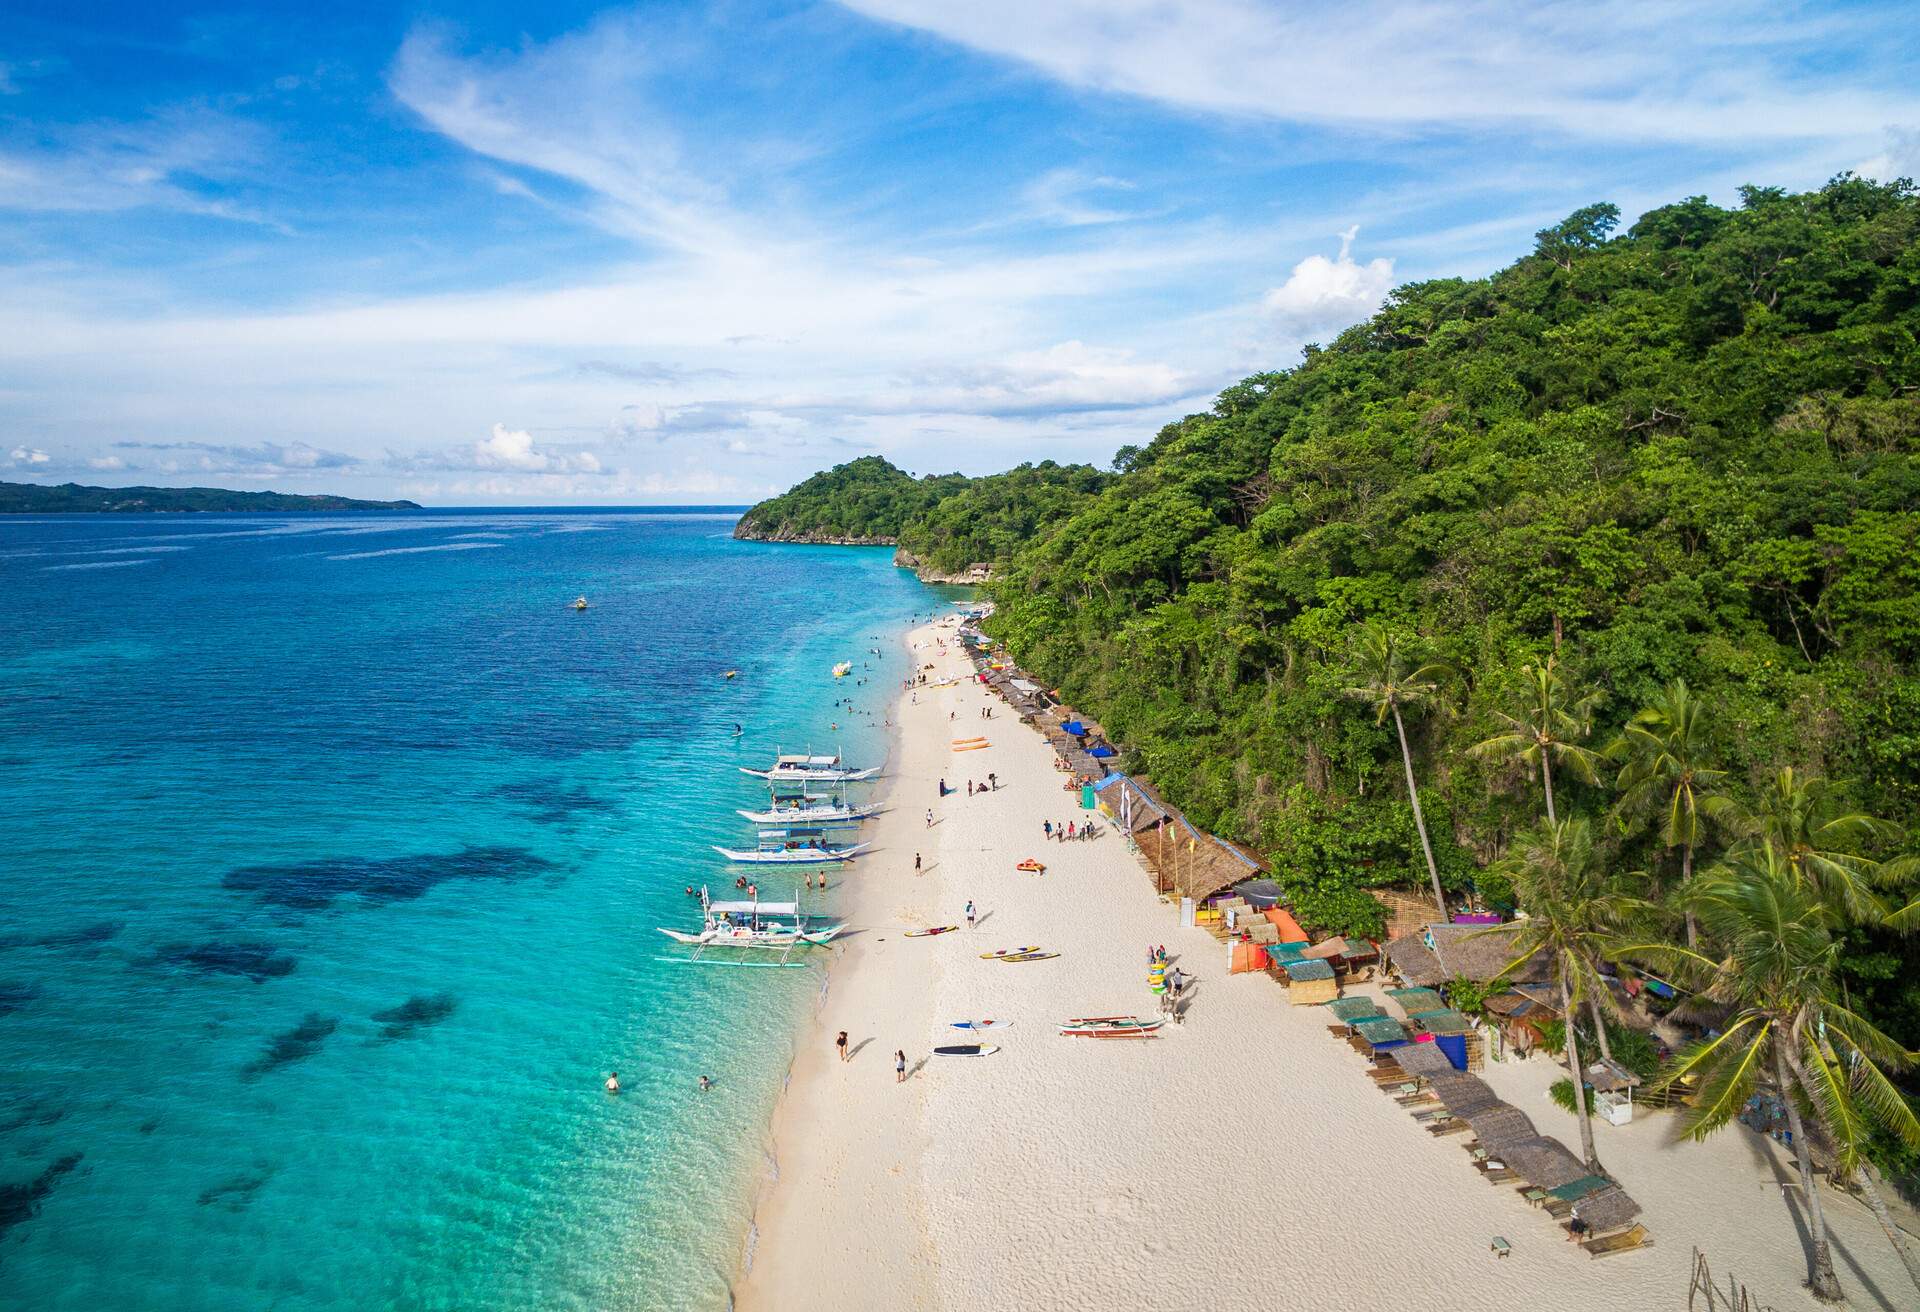 Boracay Island, Philippines, aerial view of Puka Shell Beach on a sunny day